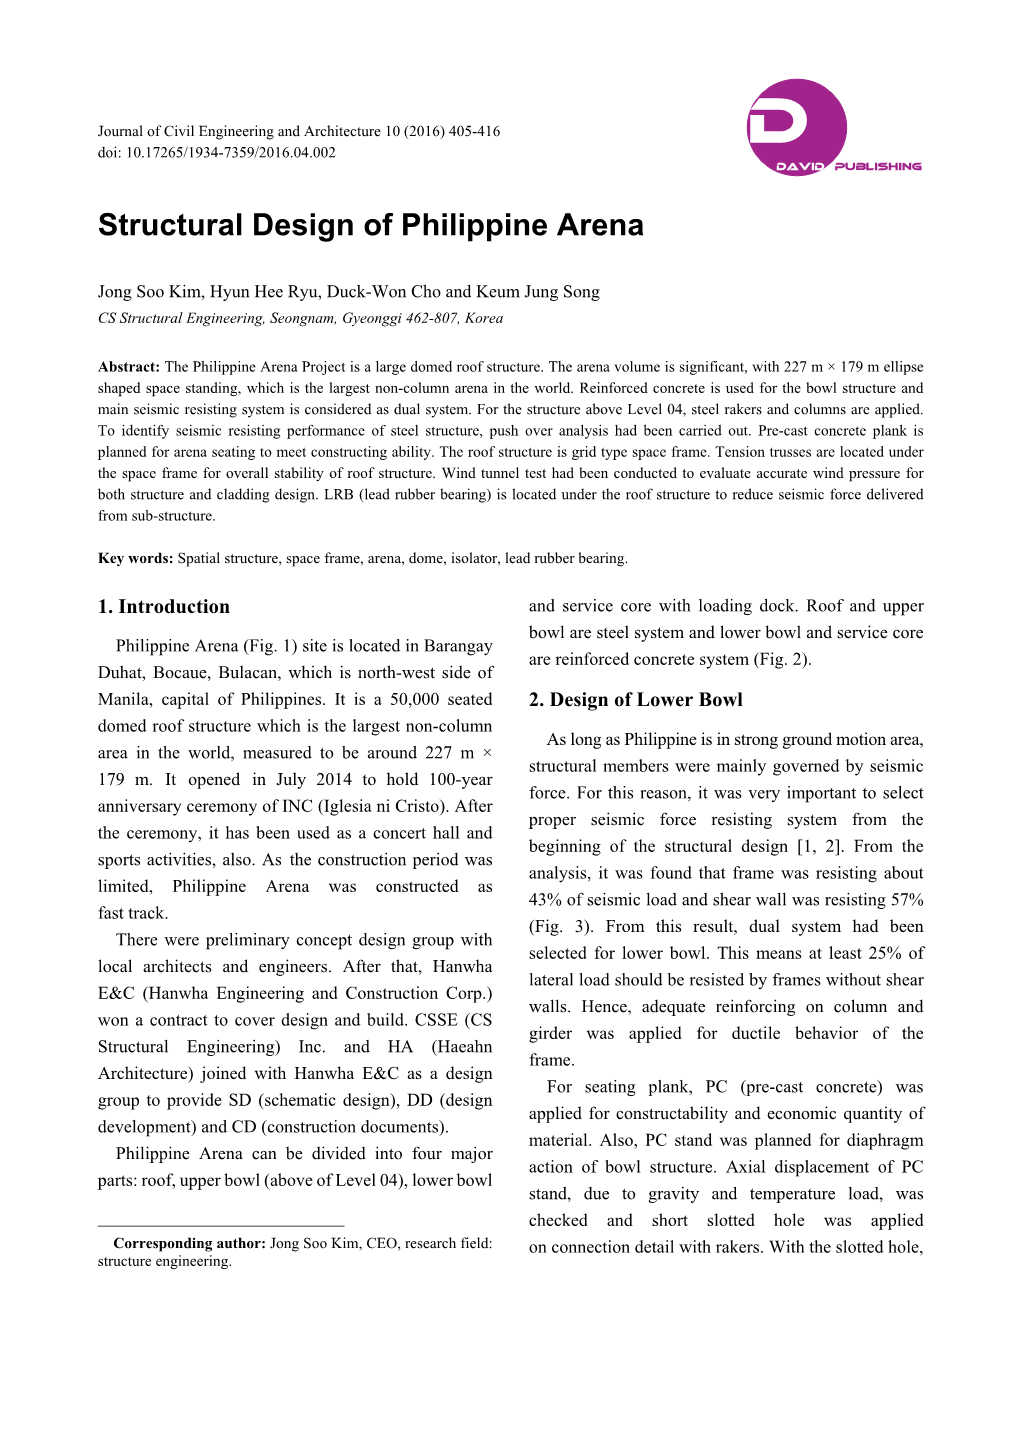 Structural Design of Philippine Arena